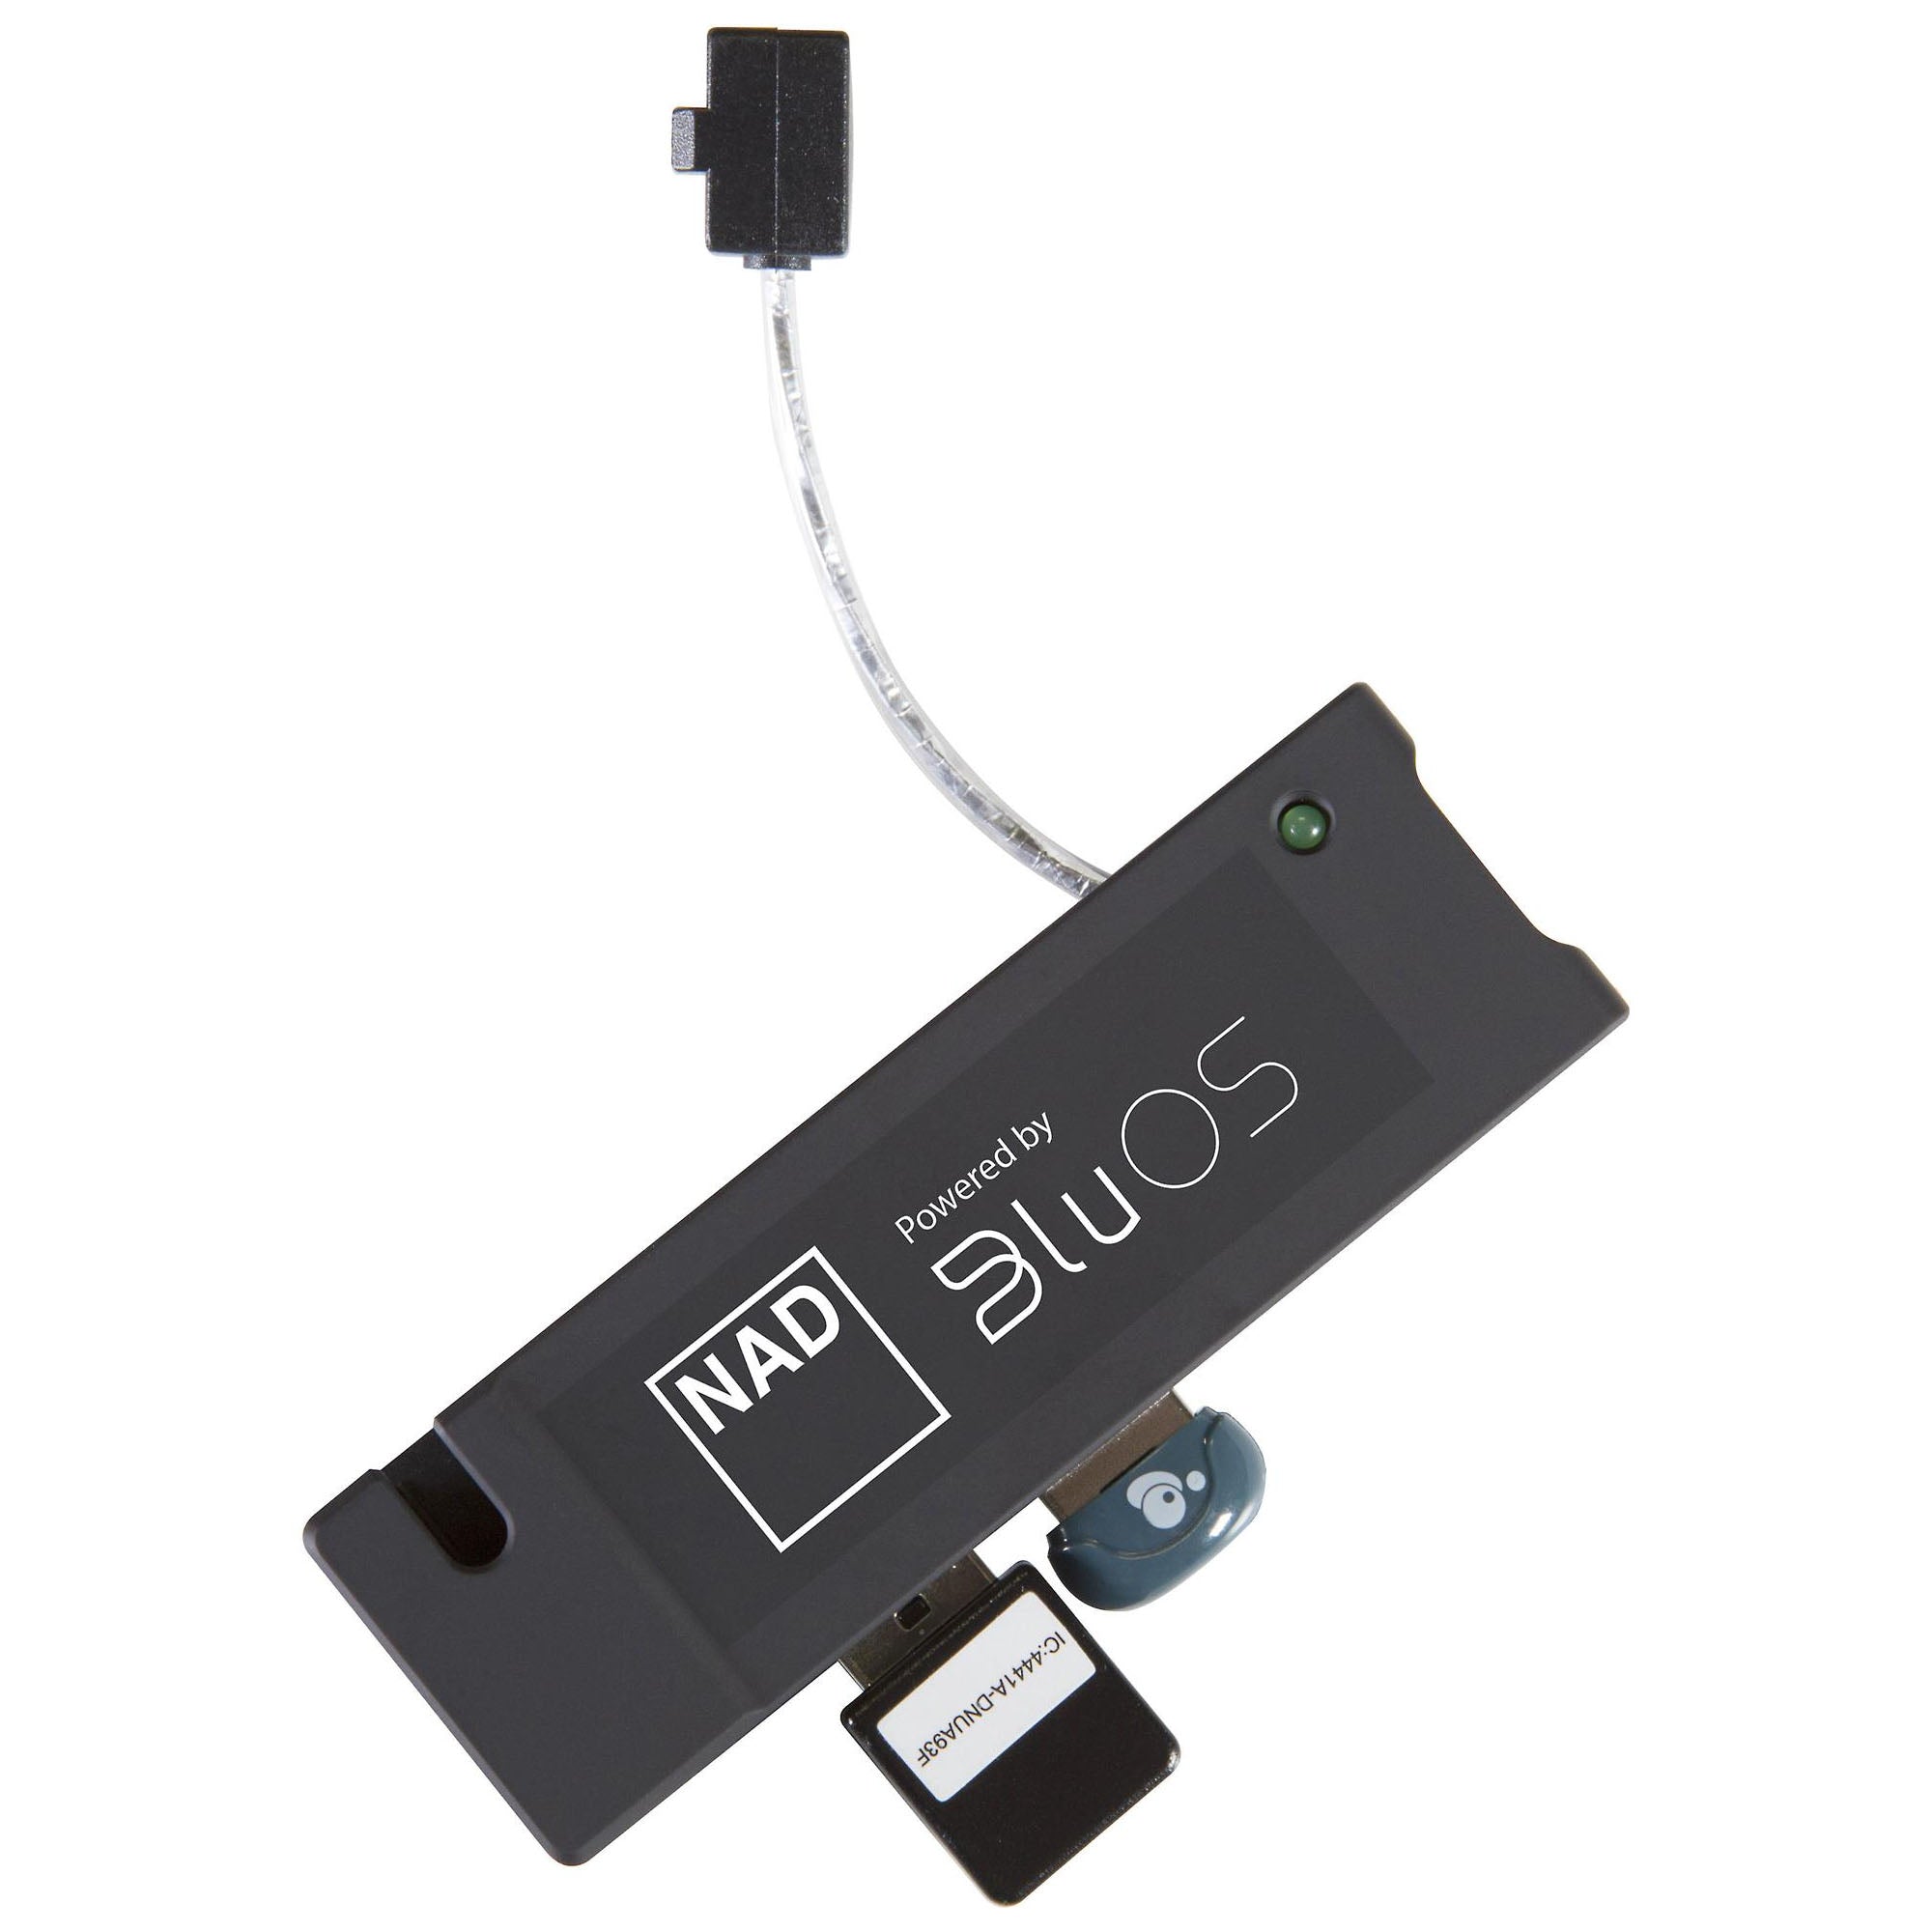 NAD BluOS upgrade kit for VM130 or VM300 MDC Cards